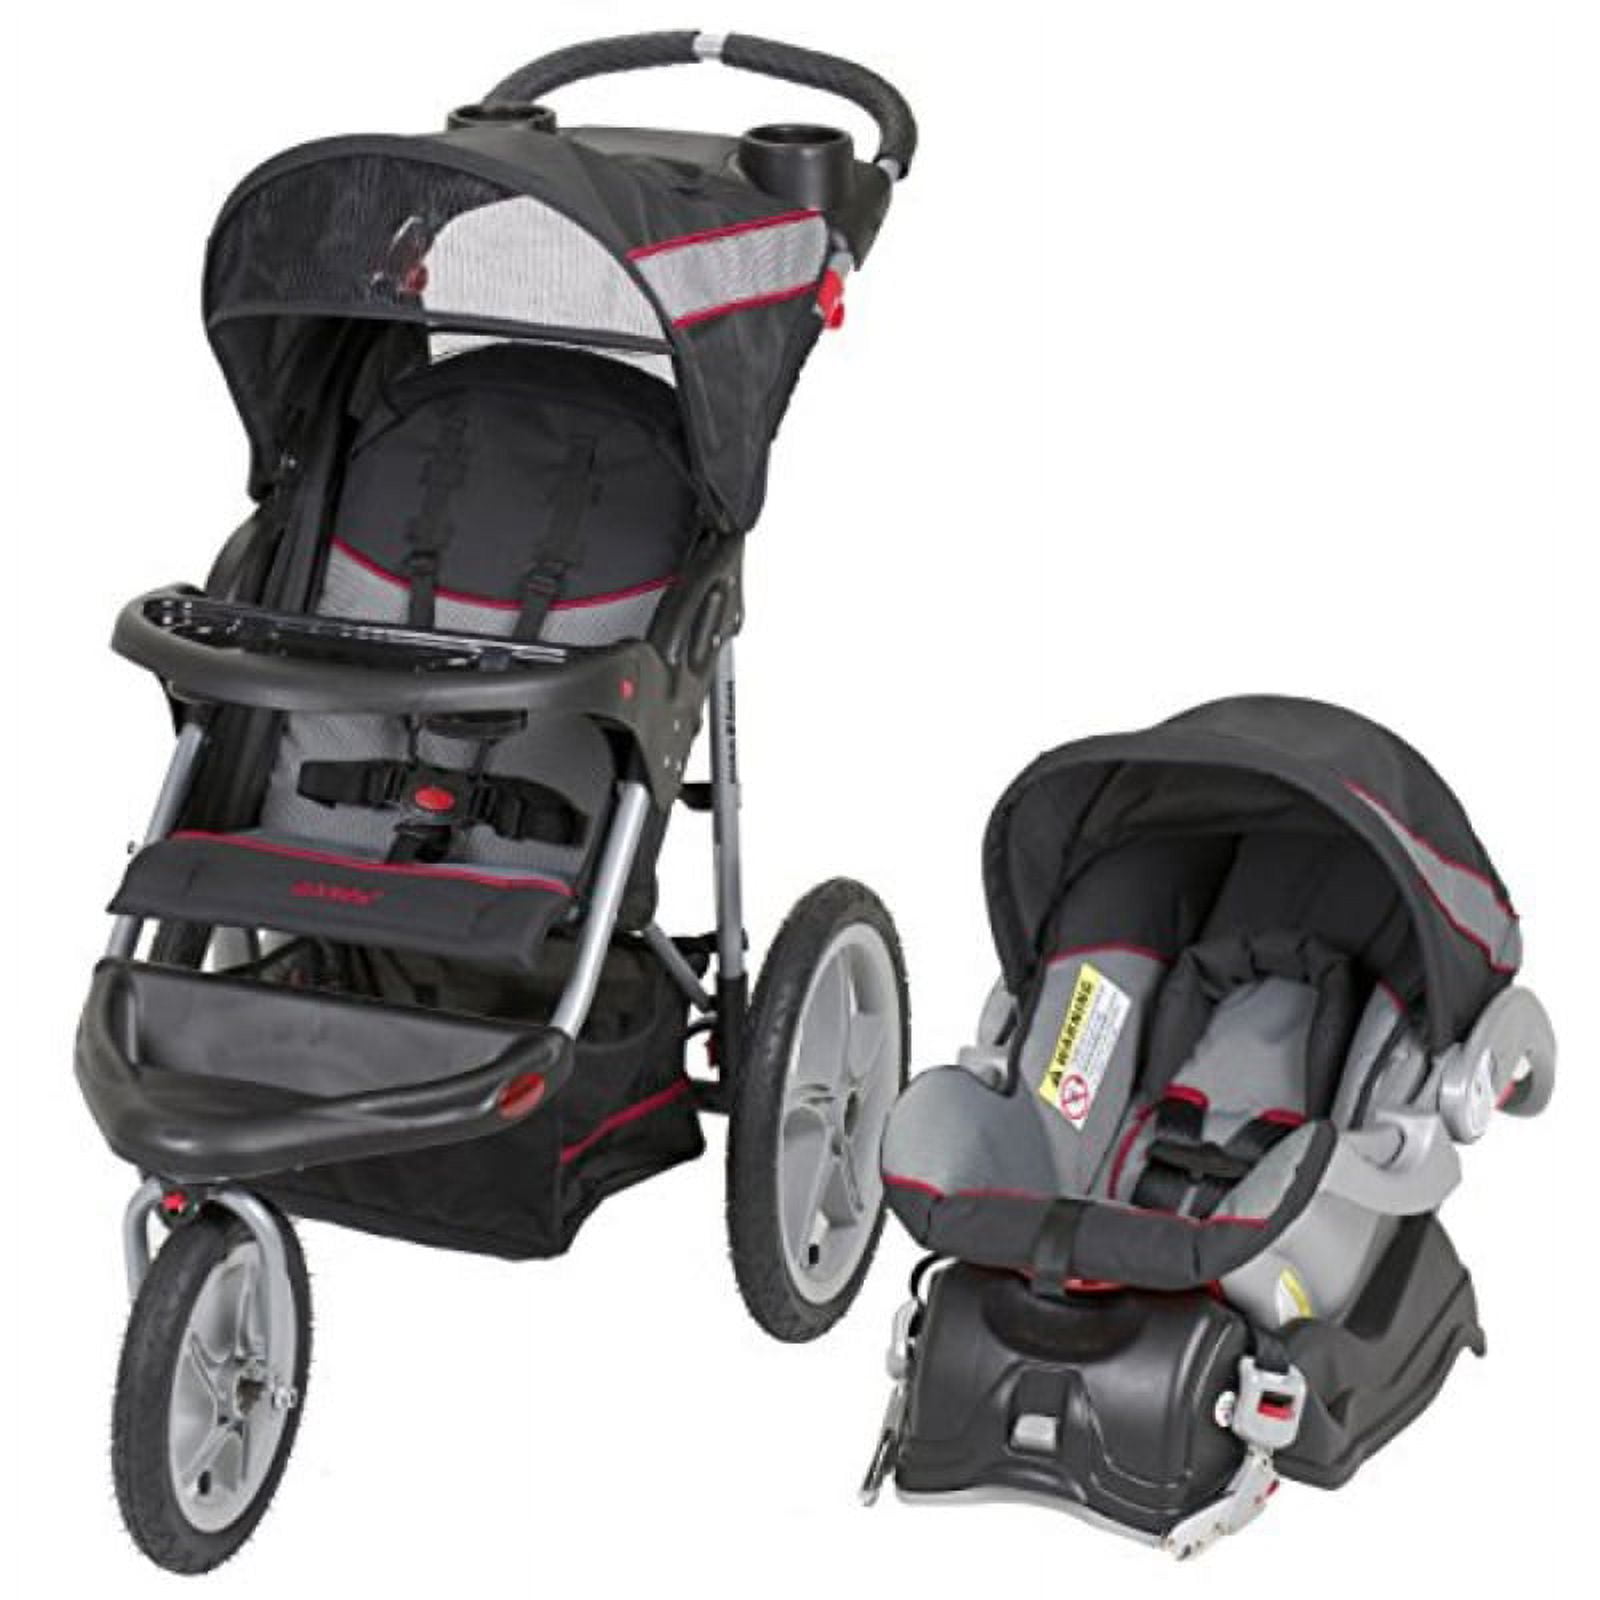 Baby Trend Range Jogger Travel System, Millennium - Walmart.com